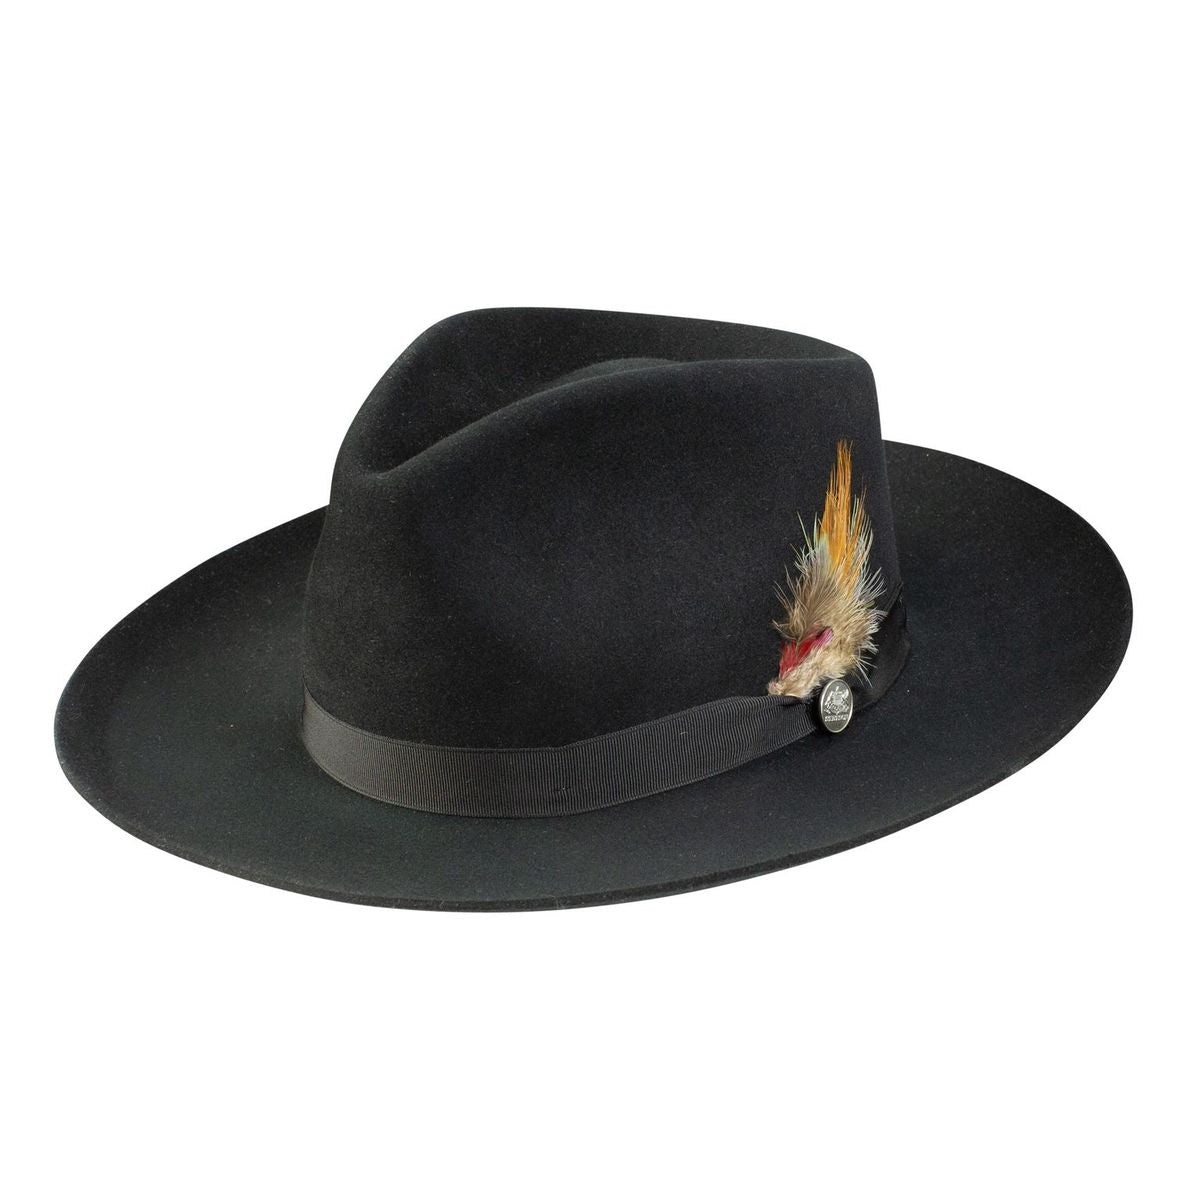 Stetson Leisure Fedora Hat